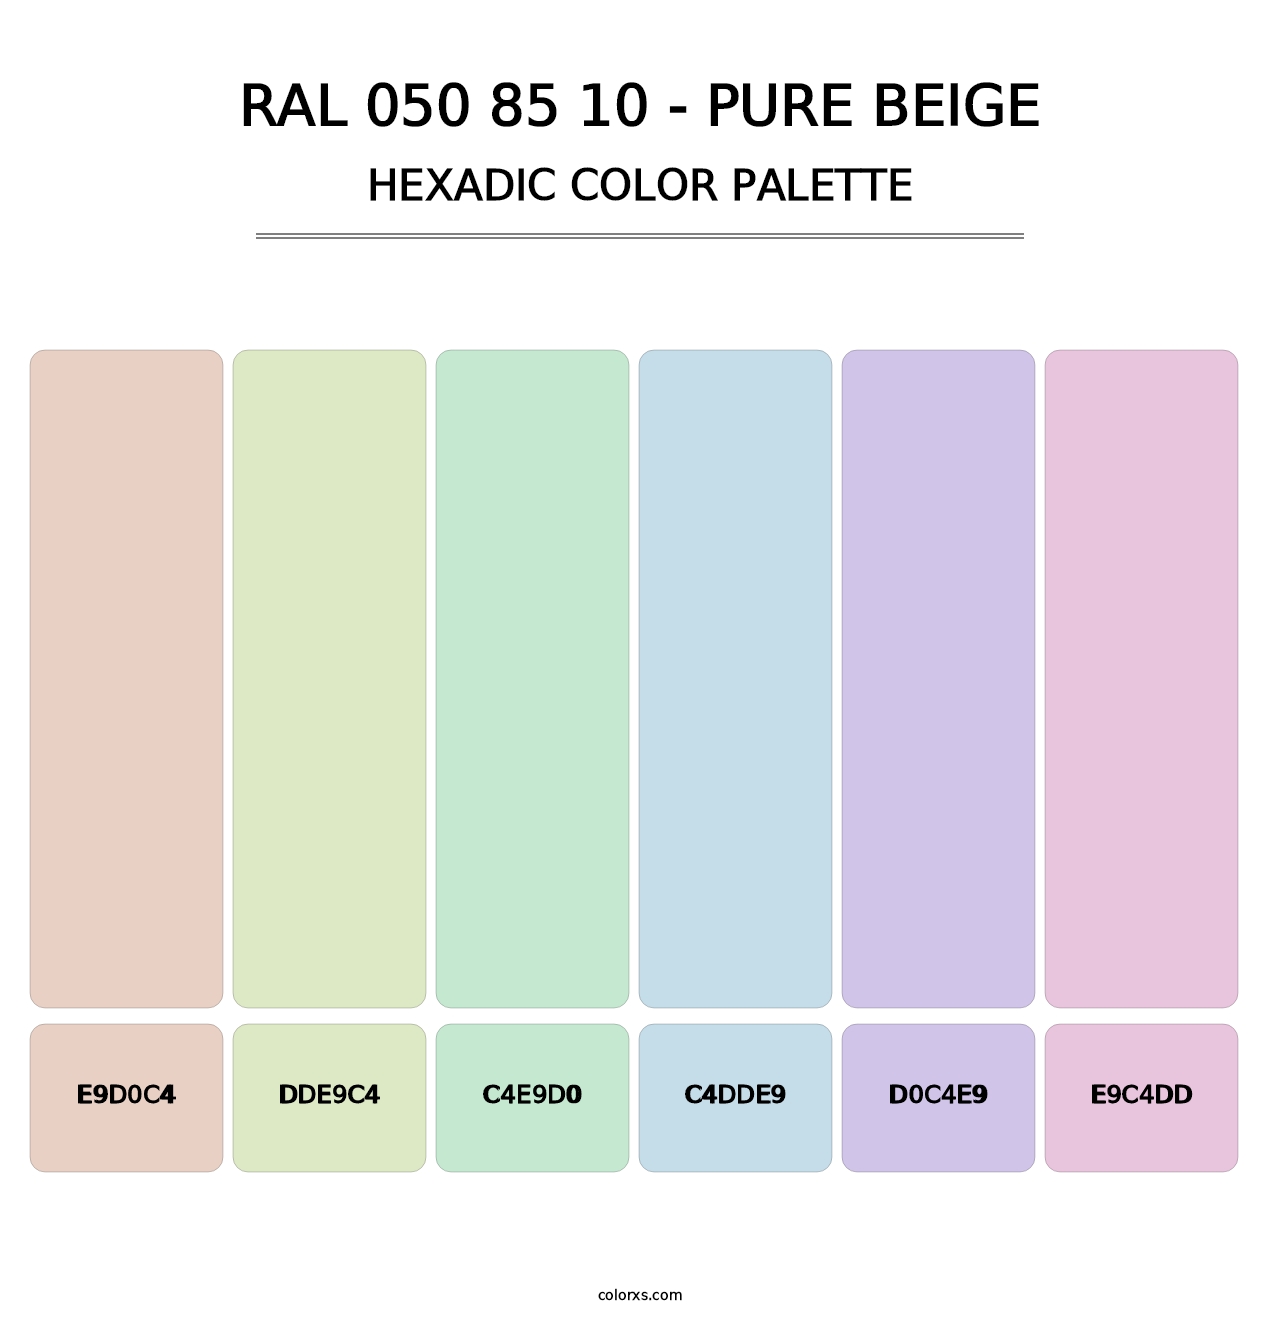 RAL 050 85 10 - Pure Beige - Hexadic Color Palette